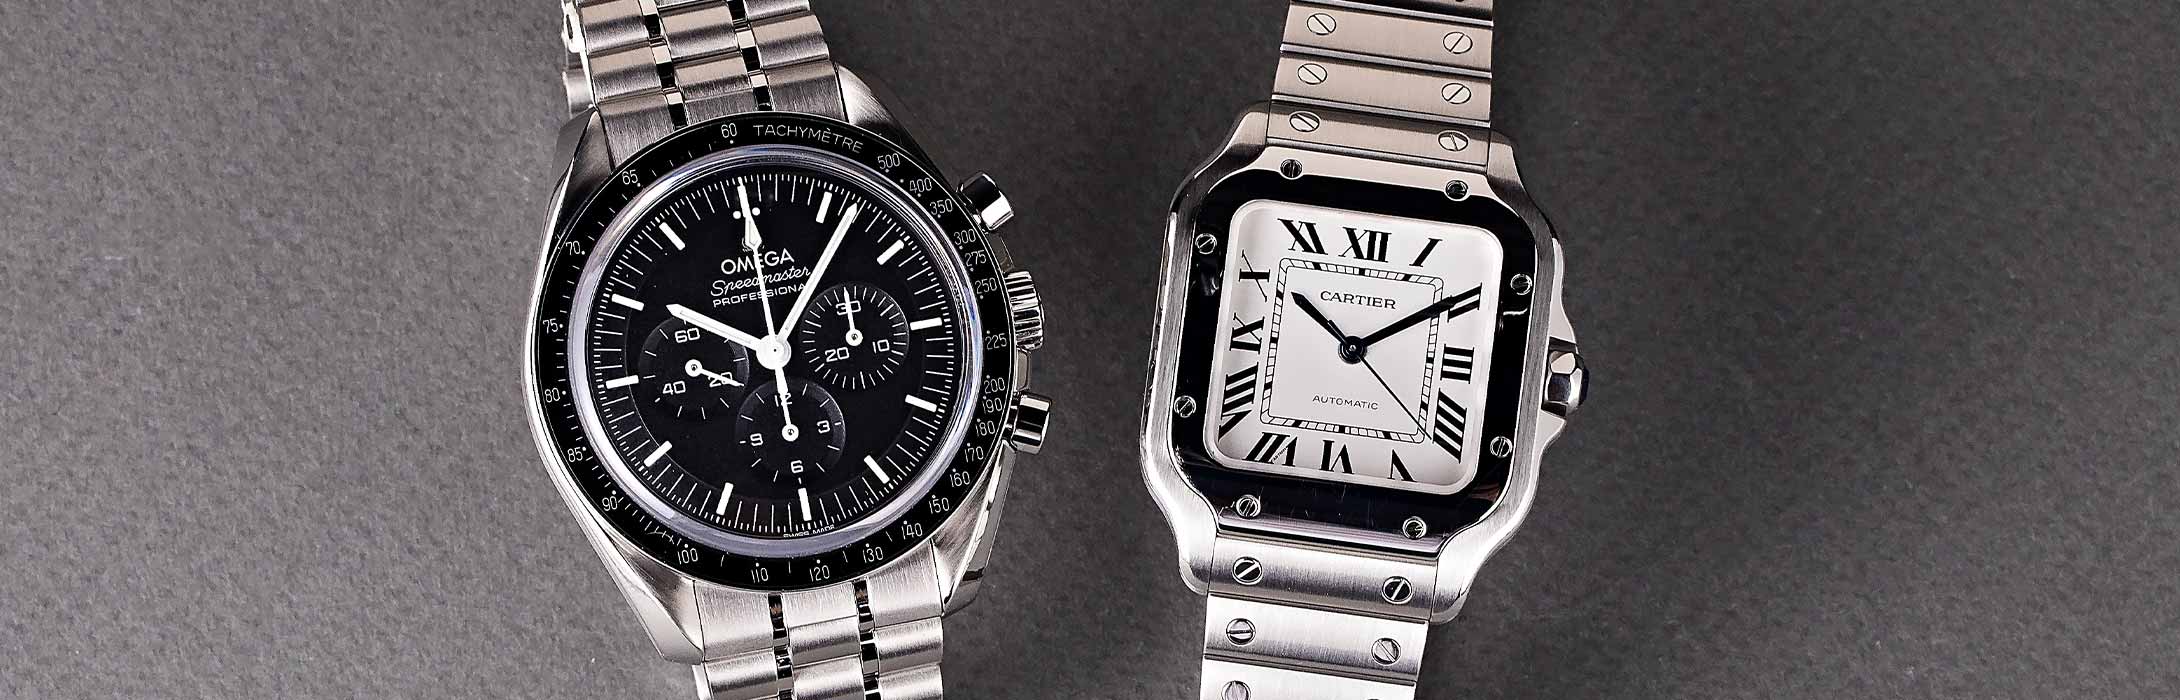 Cartier vs. OMEGA: The Ultimate Luxury Watch Showdown